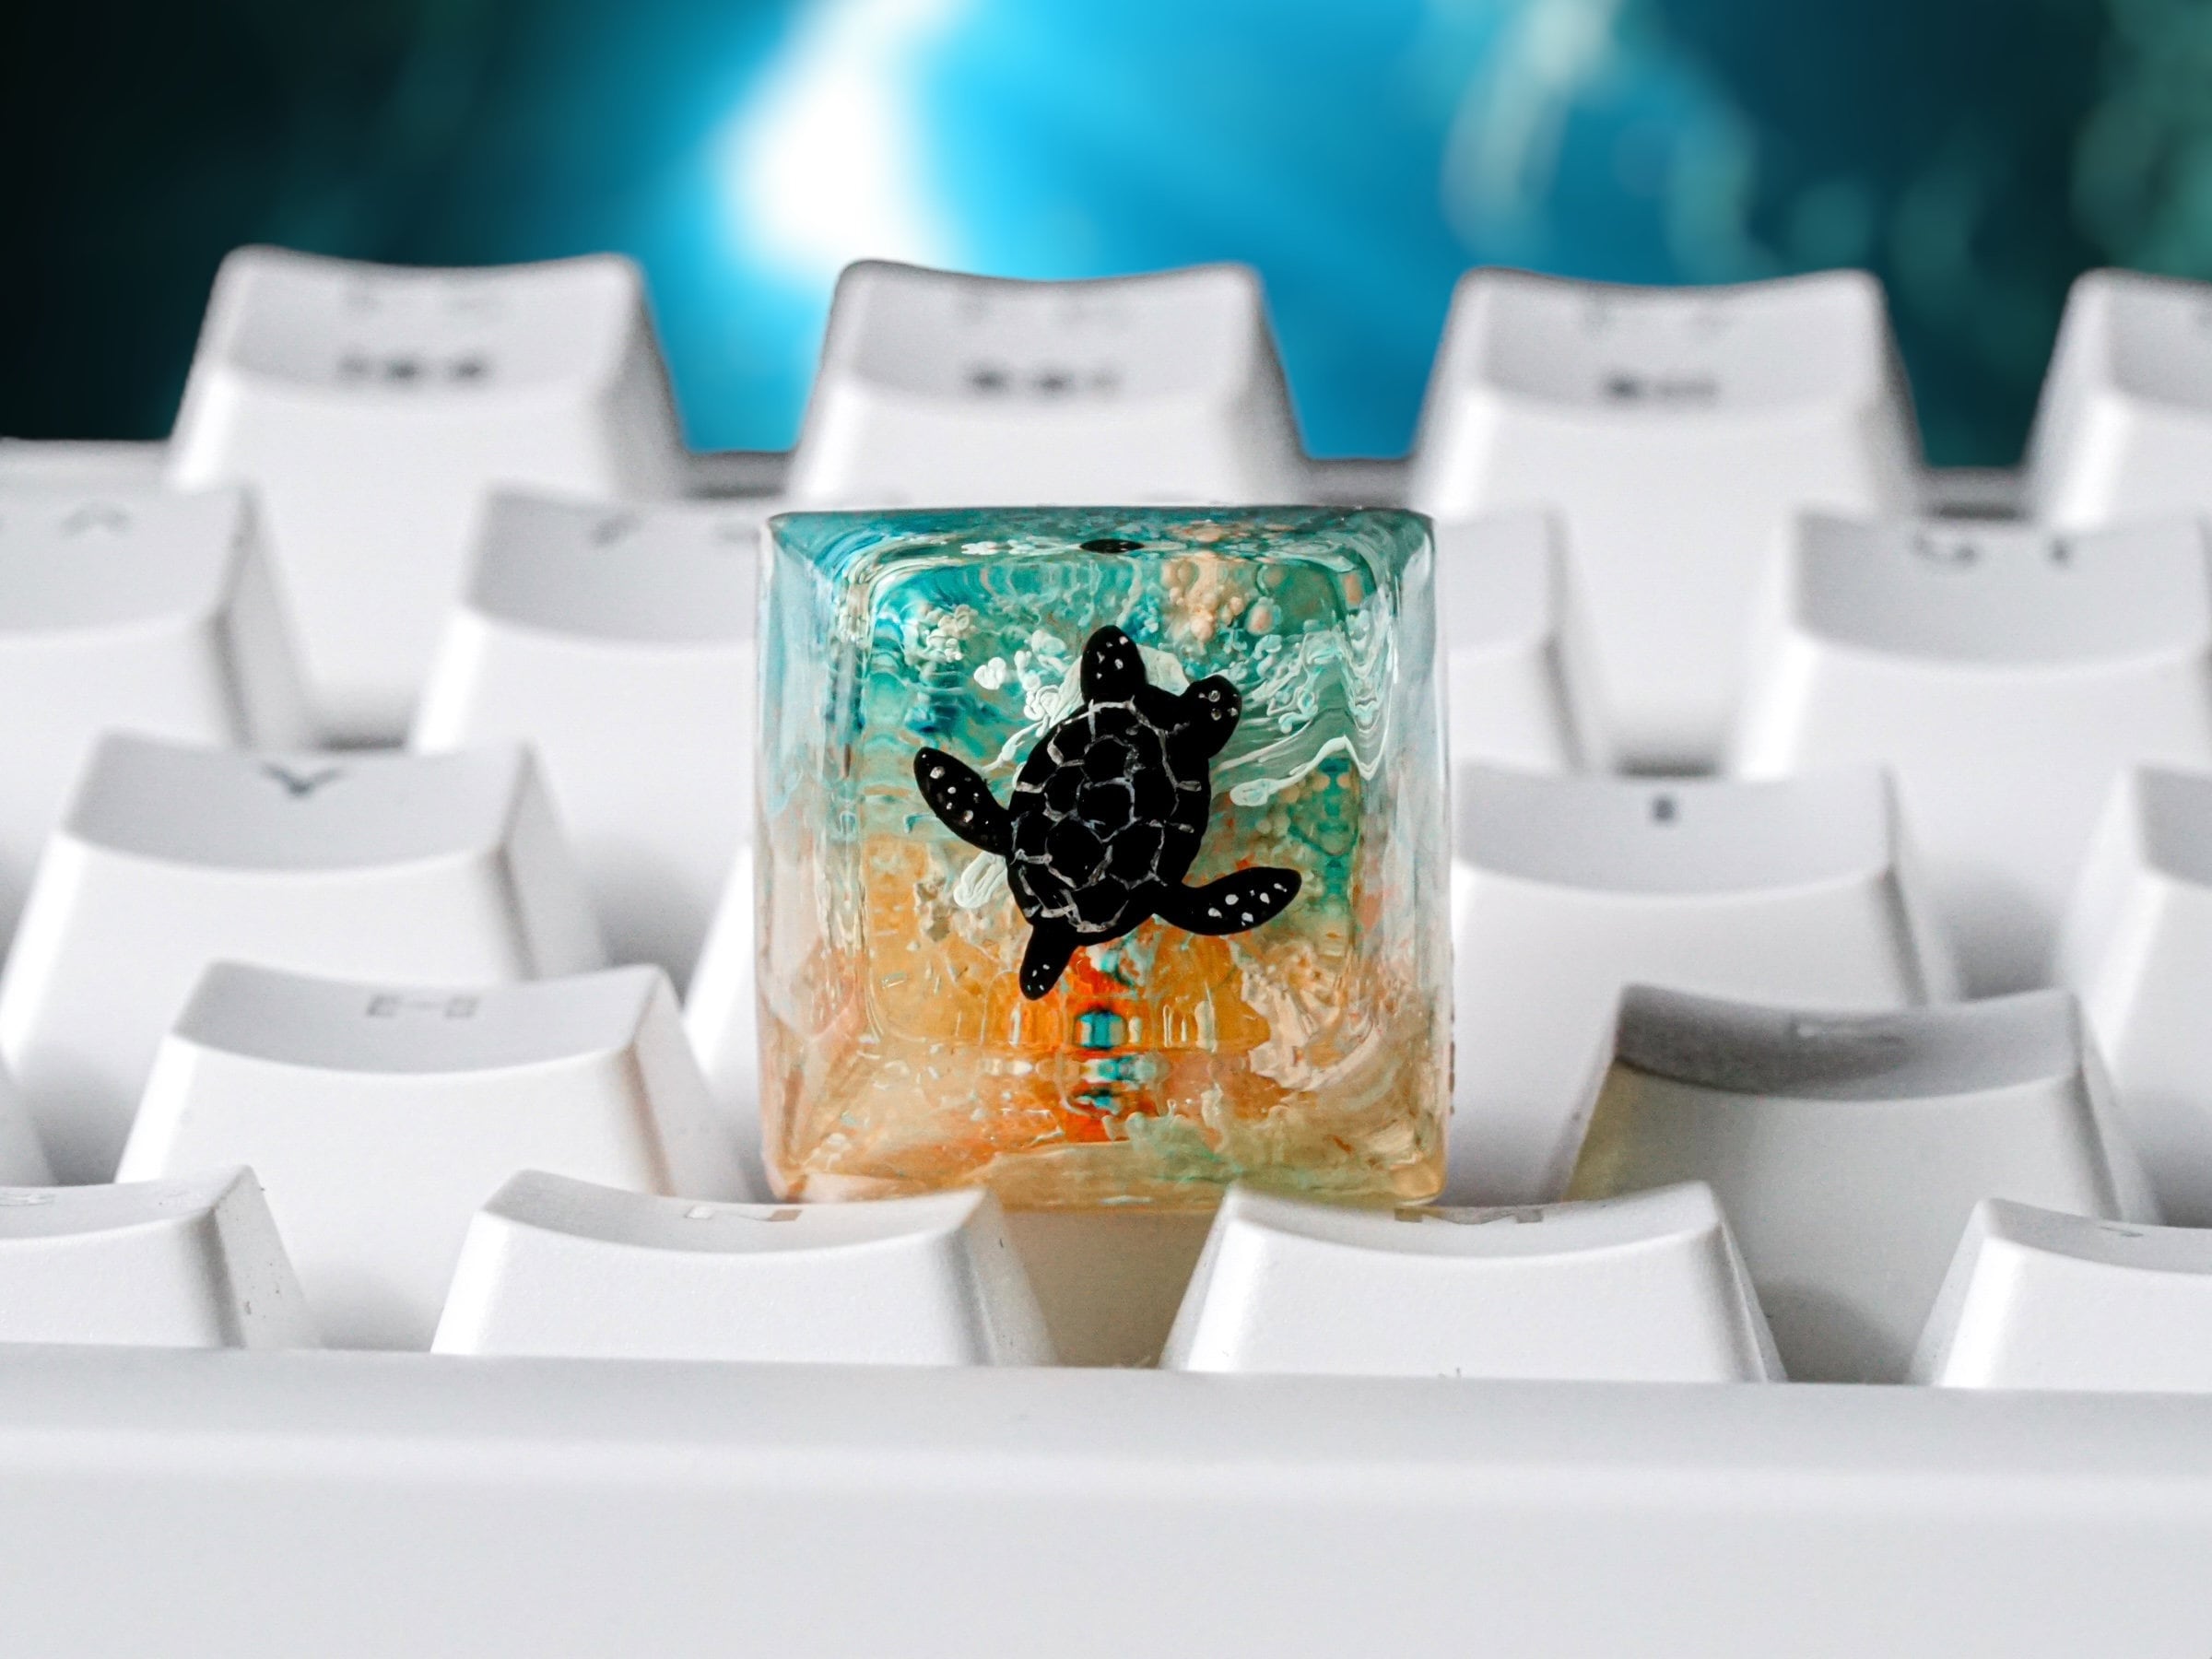 Black Turtle Keycap, Orange Blue Coral, SA Profile Keycap, Keycap for MX Cherry Switches Mechanical Keyboard, Handmade Gift